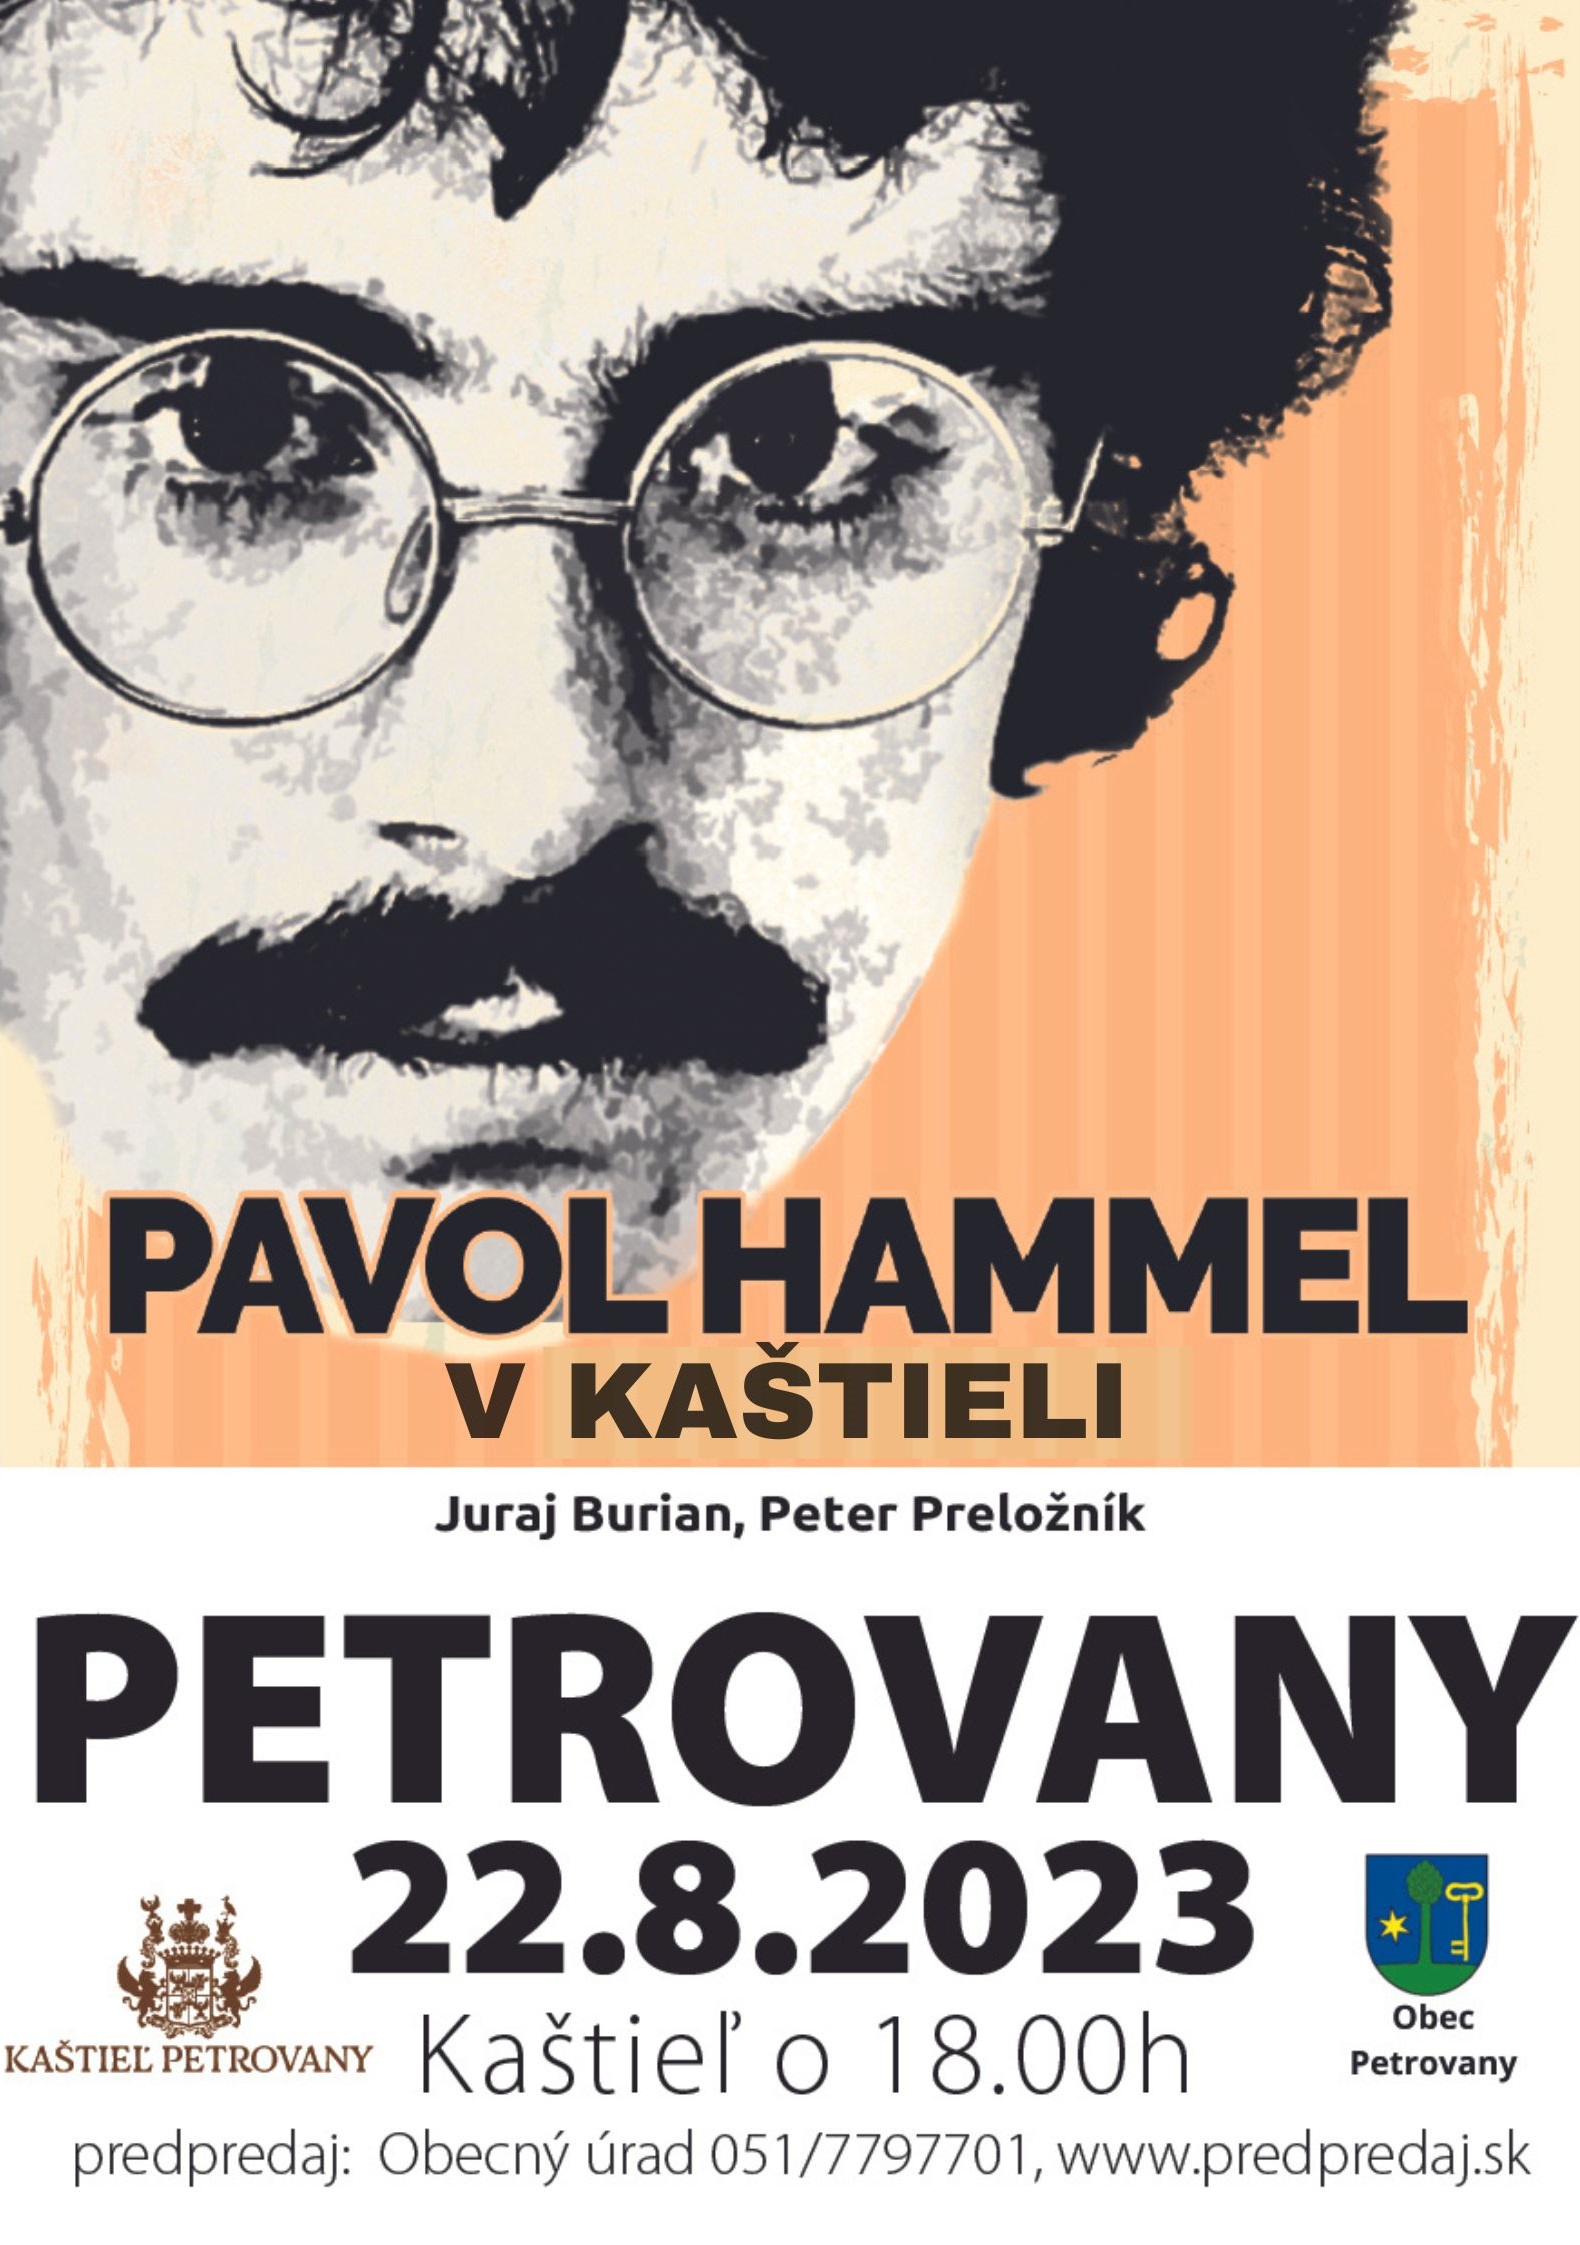 Plagát pre koncert interpreta Pavol Hammel